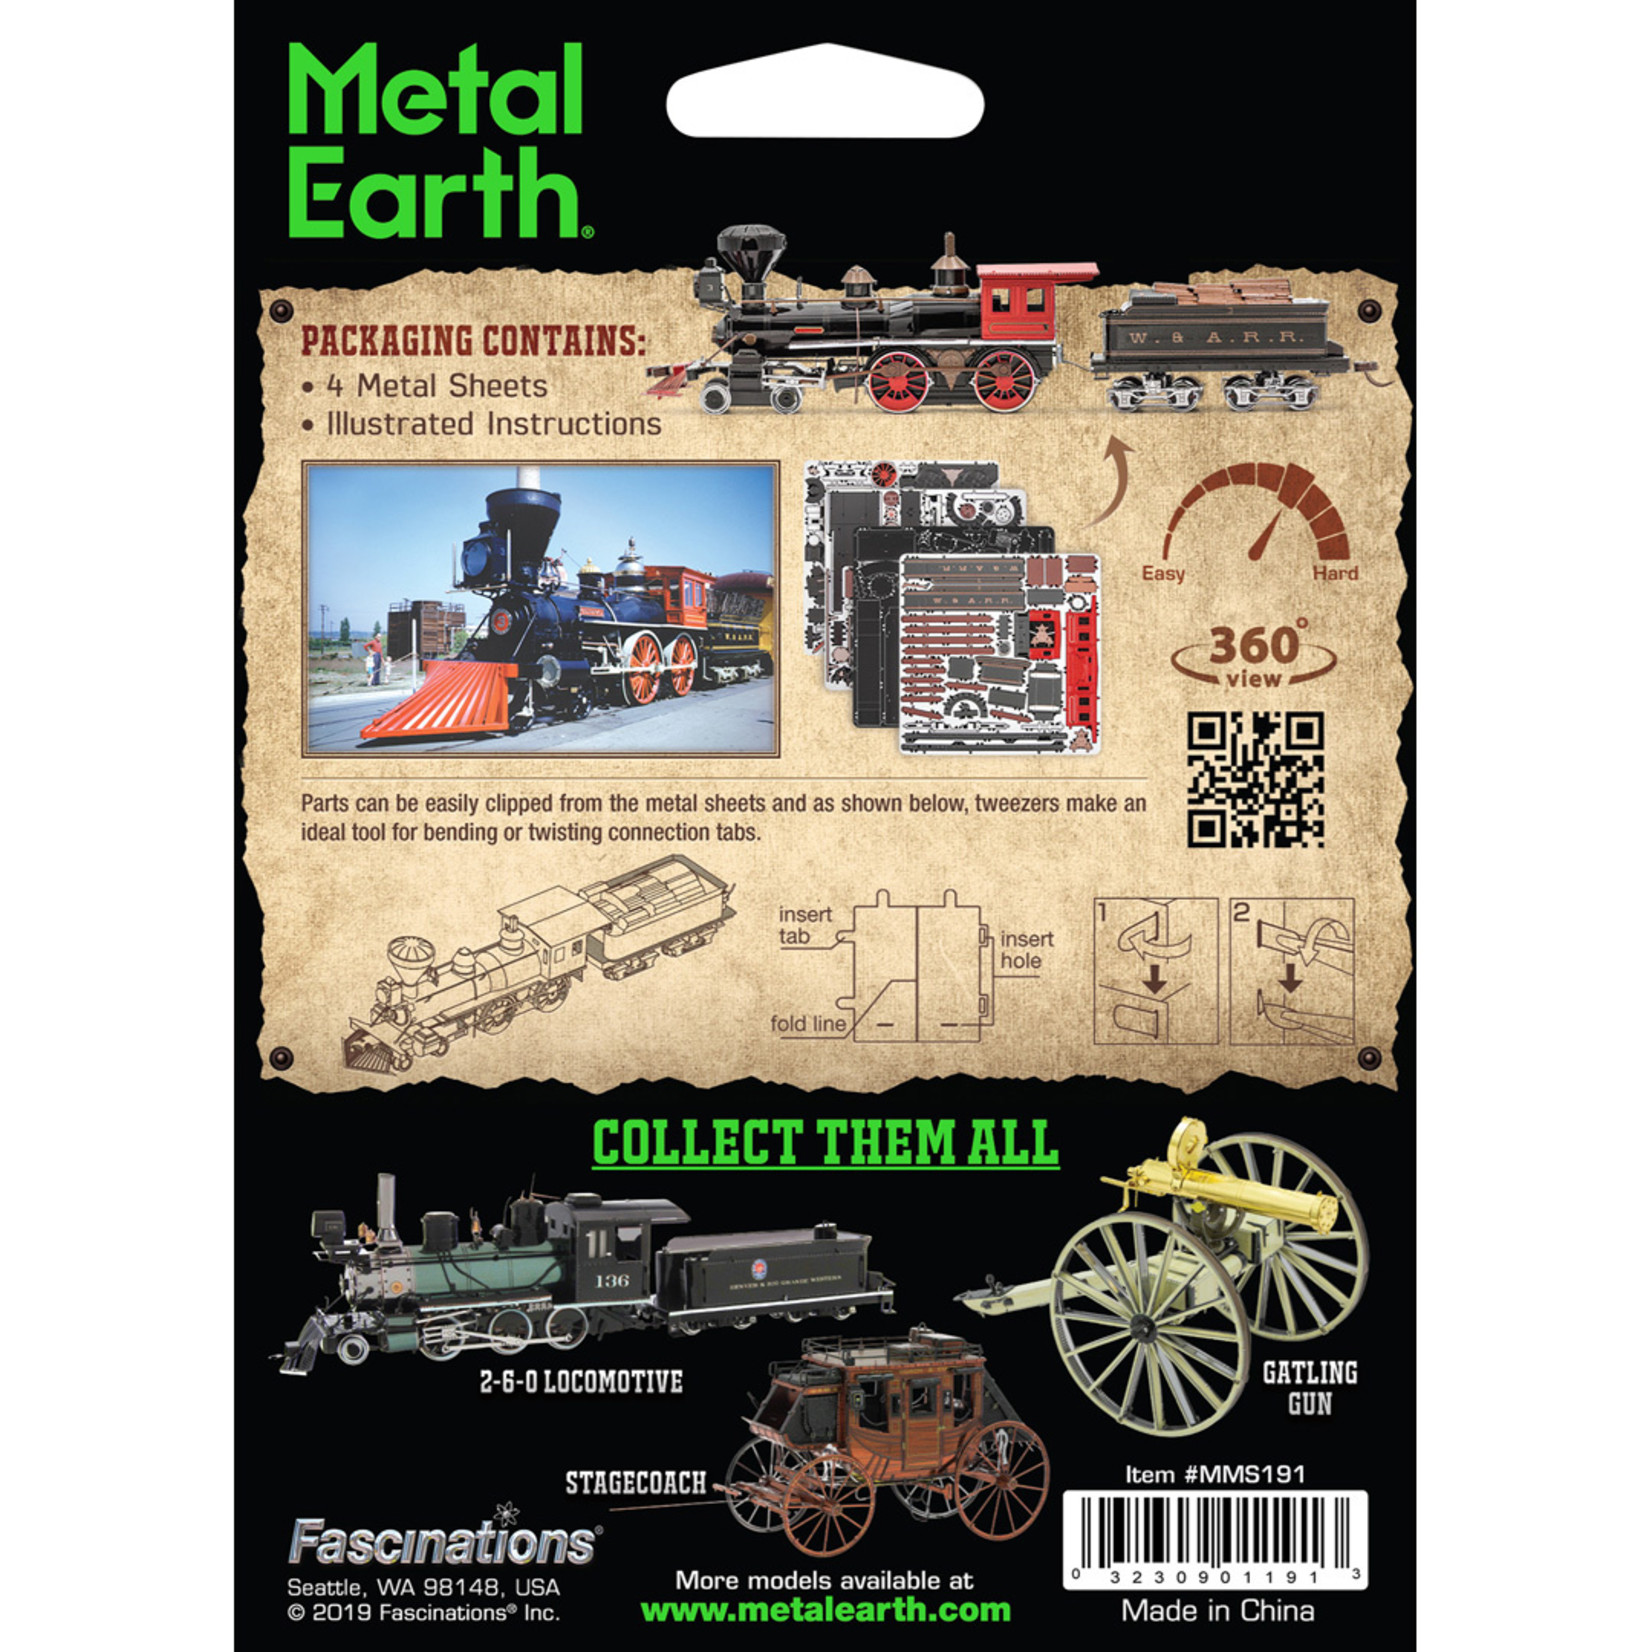 Metal Earth Metallbausatz Wild West 4-4-0 Locomotive - Miniatur Wunderland  Shop